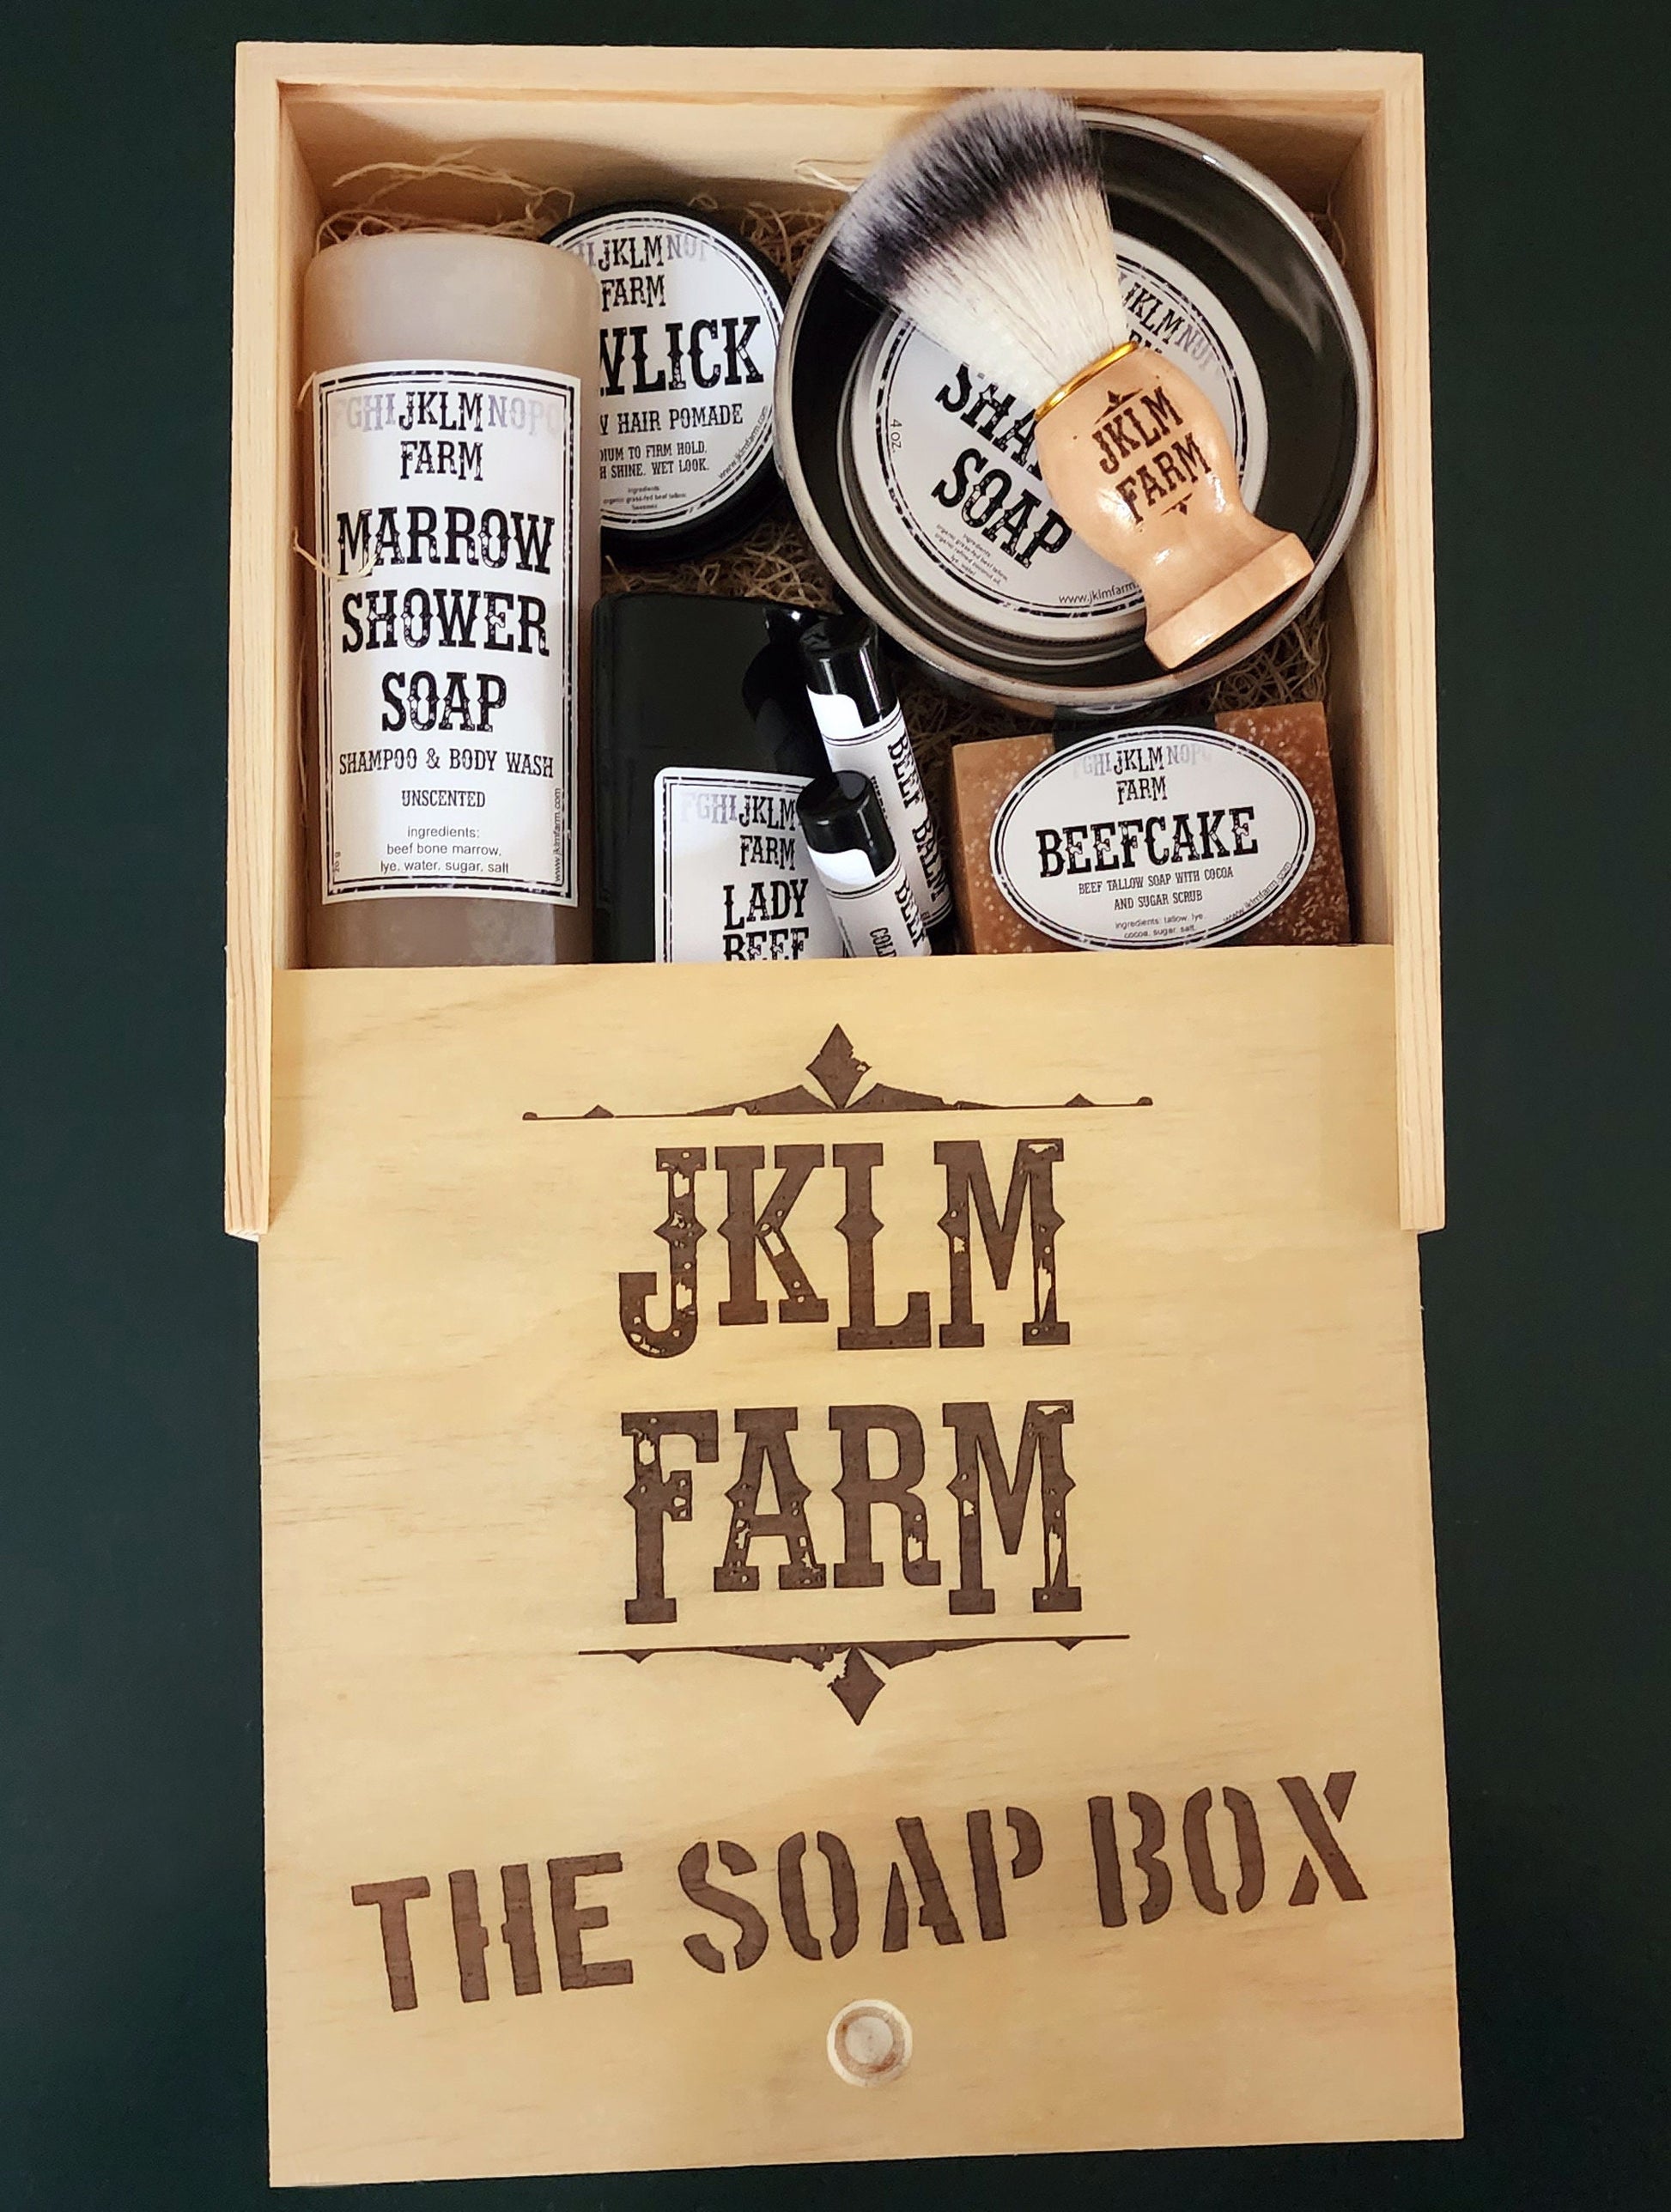 jklm farm natural organic grass-fed tallow marrow soap box gift set